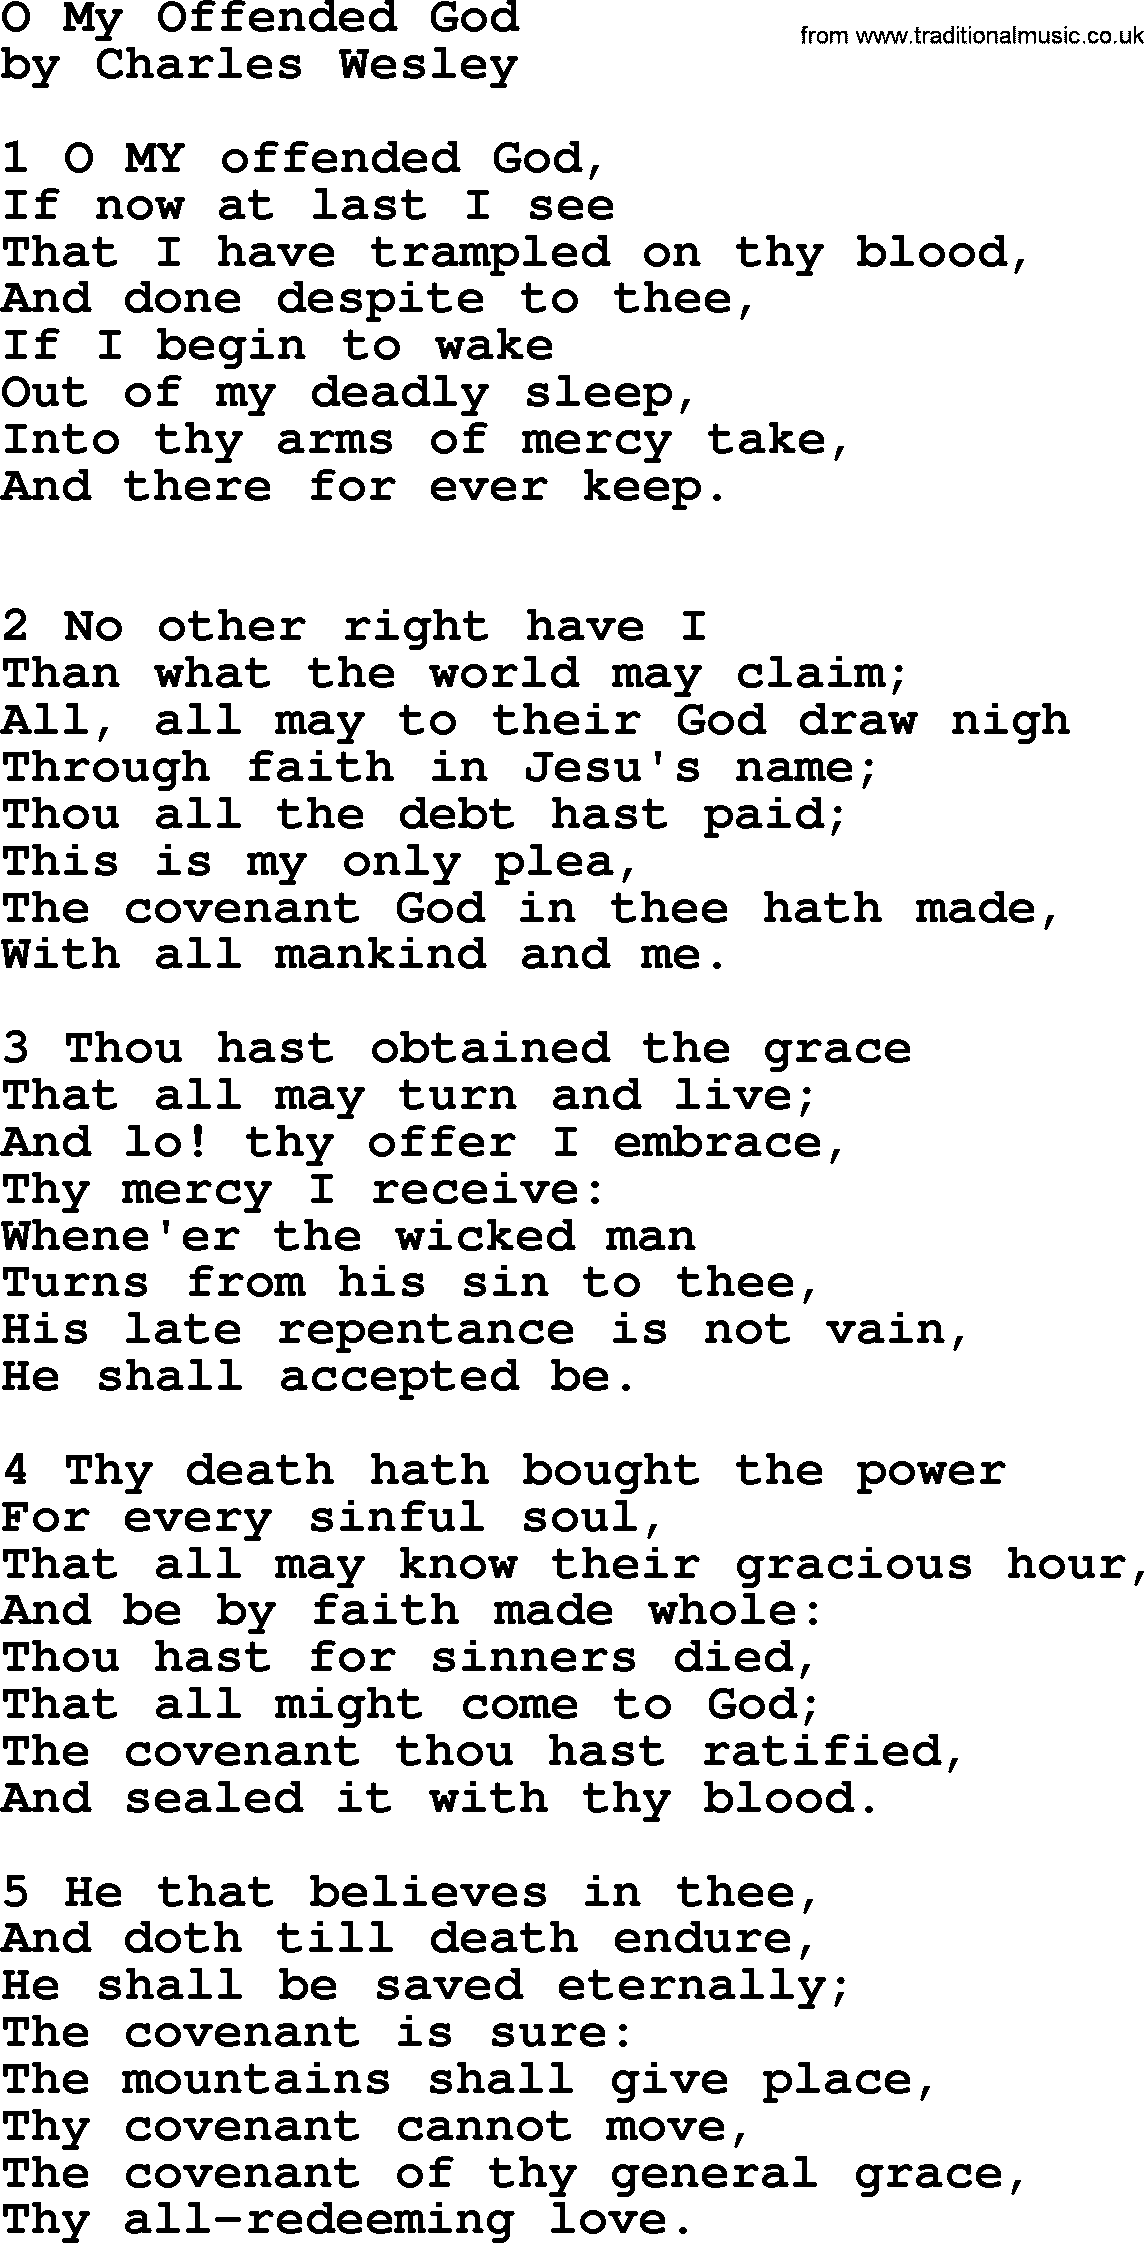 Charles Wesley hymn: O My Offended God, lyrics